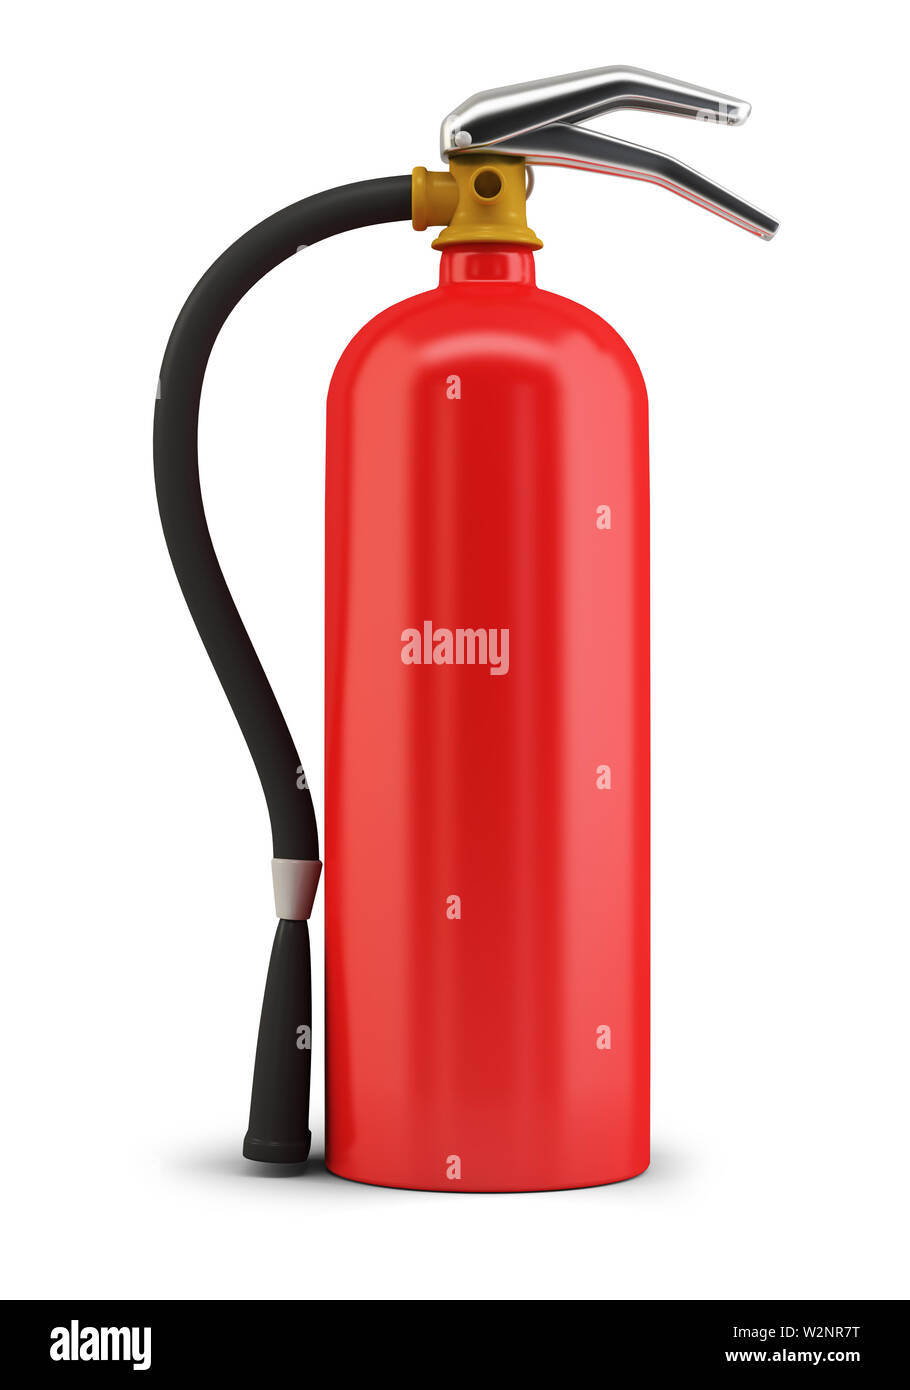 Fire extinguisher. 3d image. Isolated white background. Stock Photo